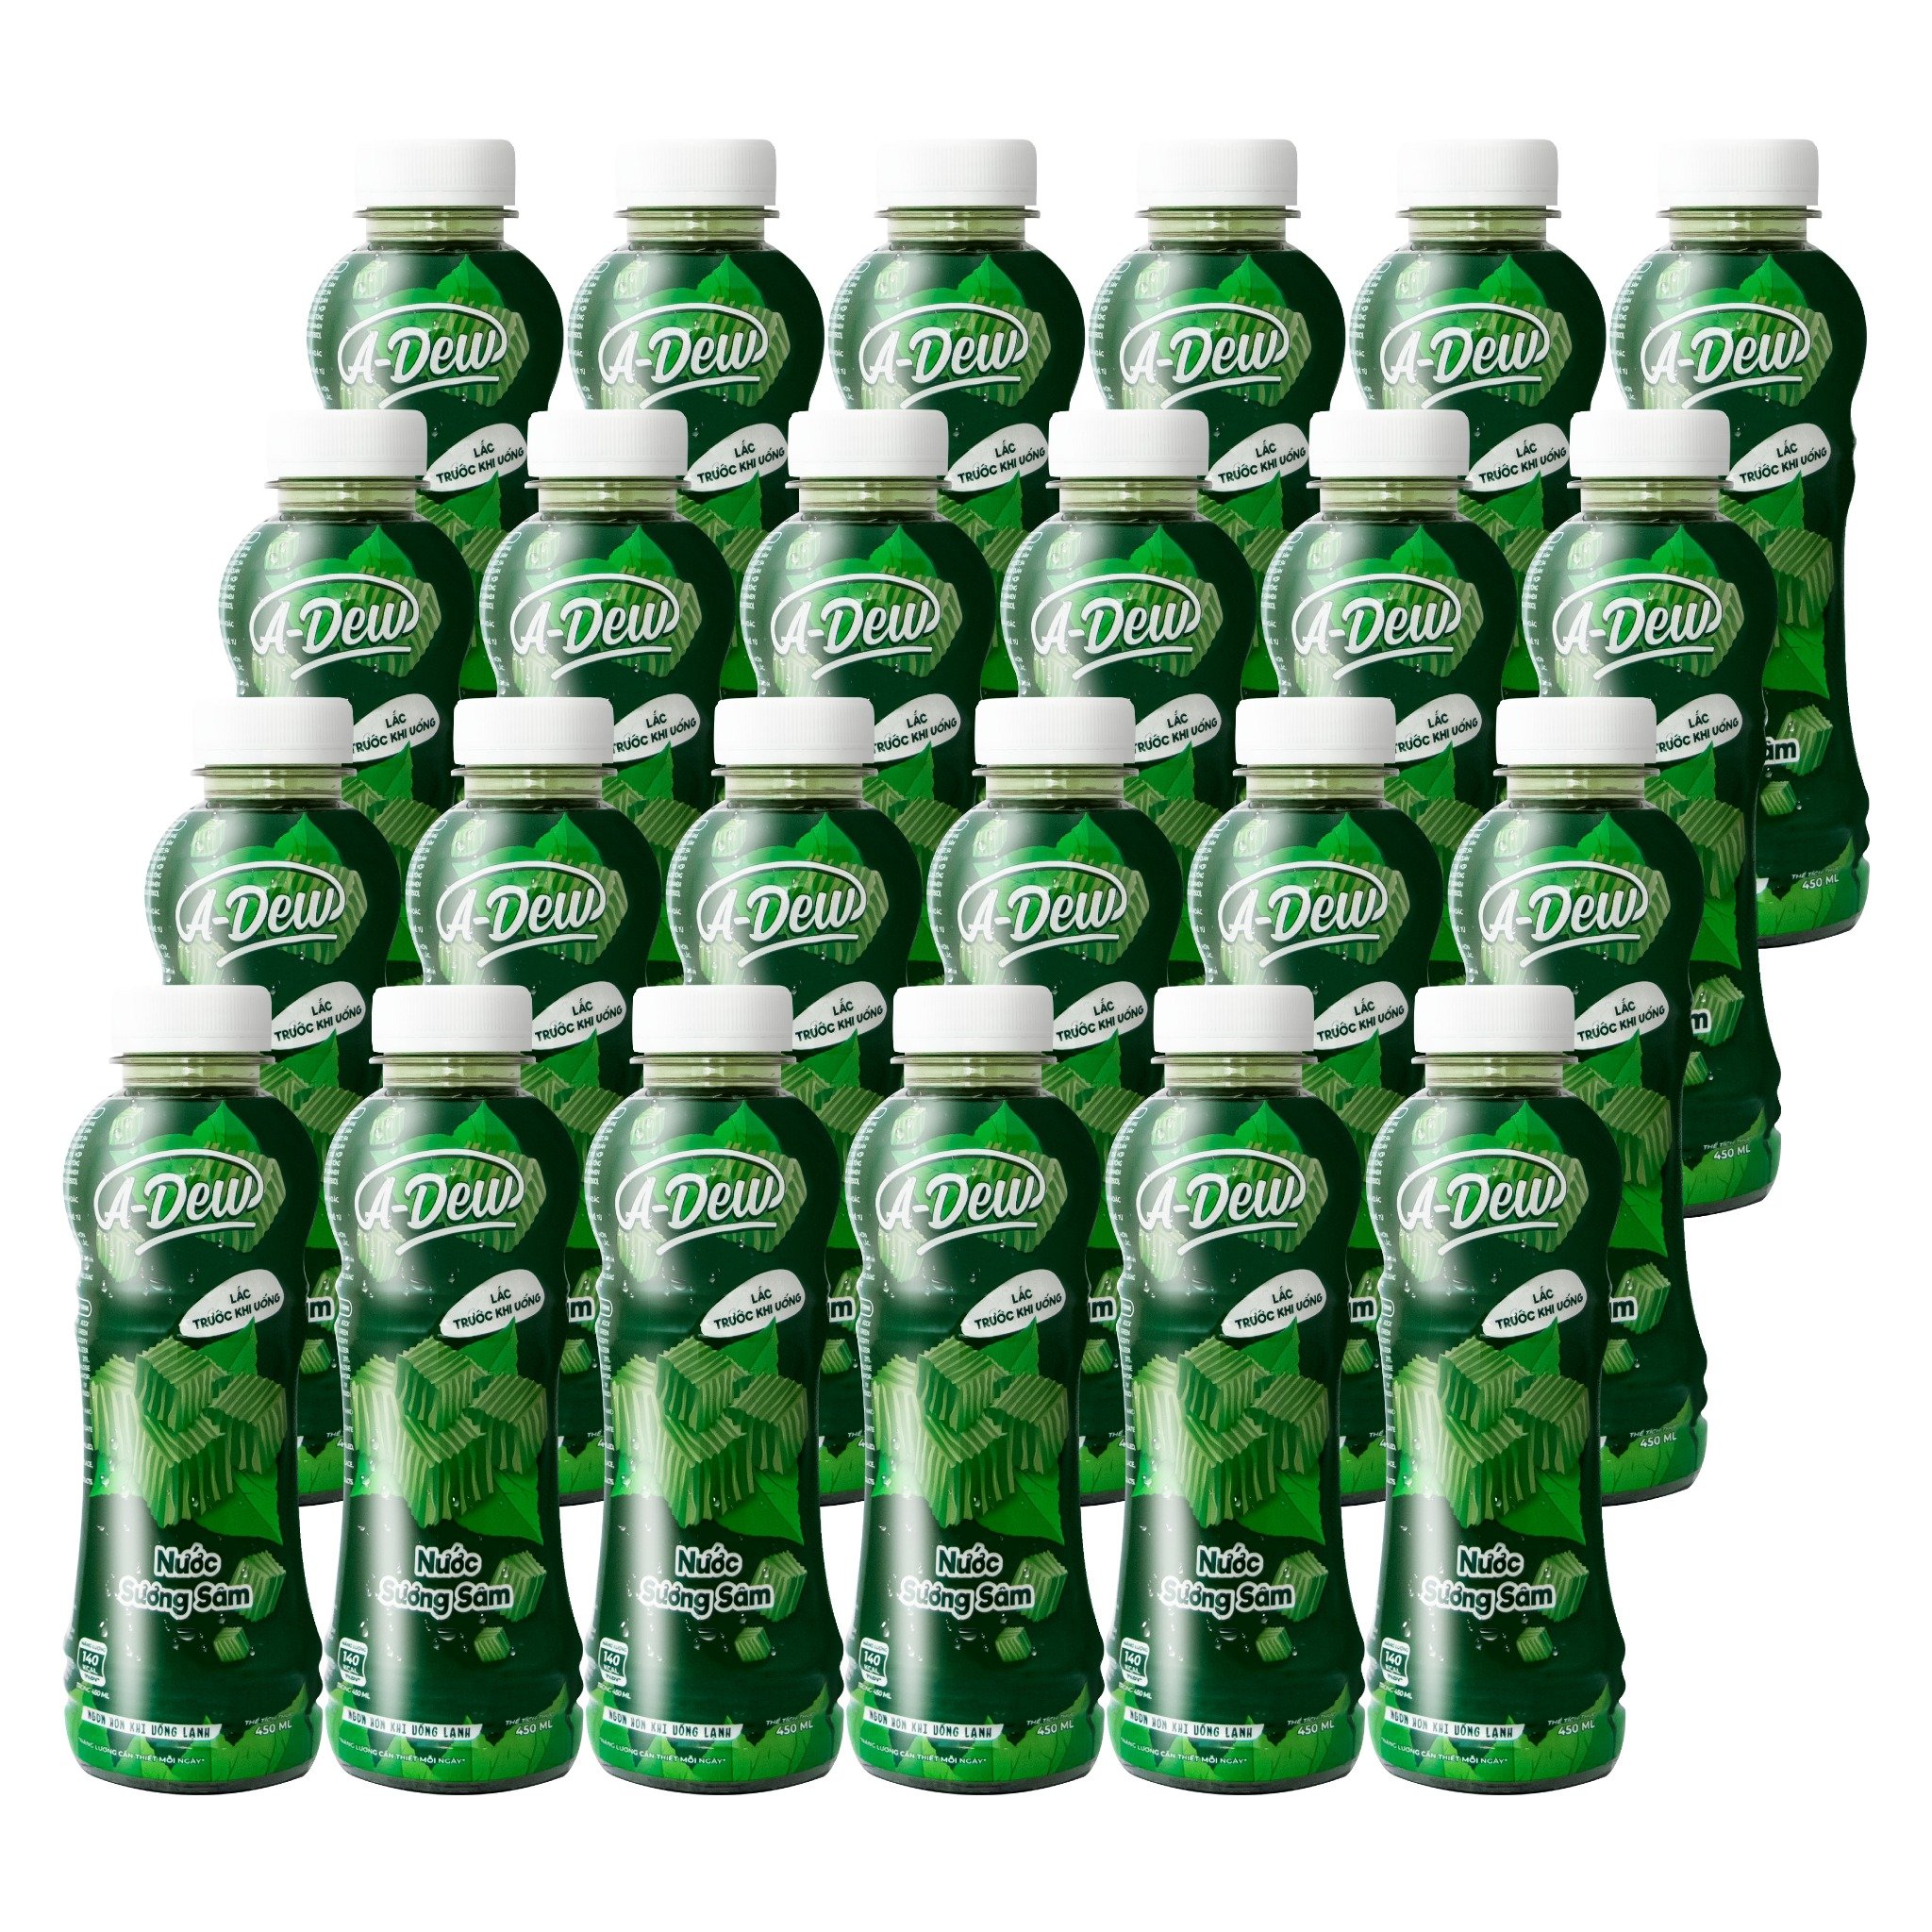 450ml A-Dew Green Grass Jelly Drink